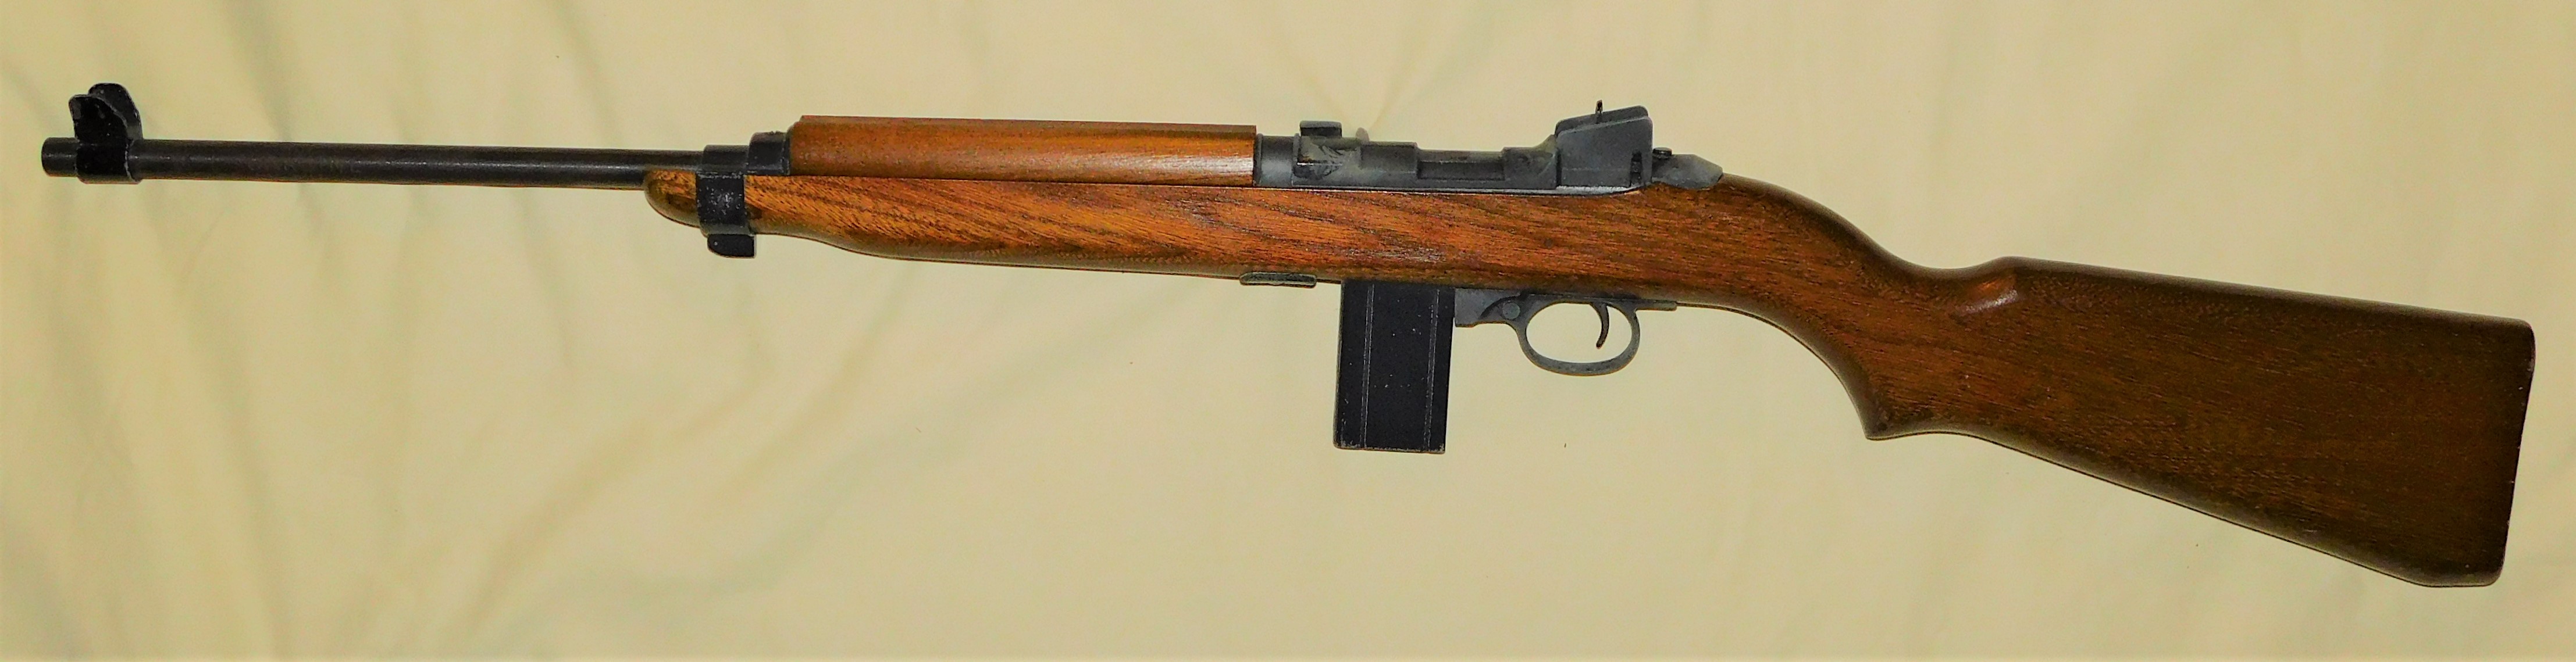 84 Crosman M1 Carbine 1966-76.JPG